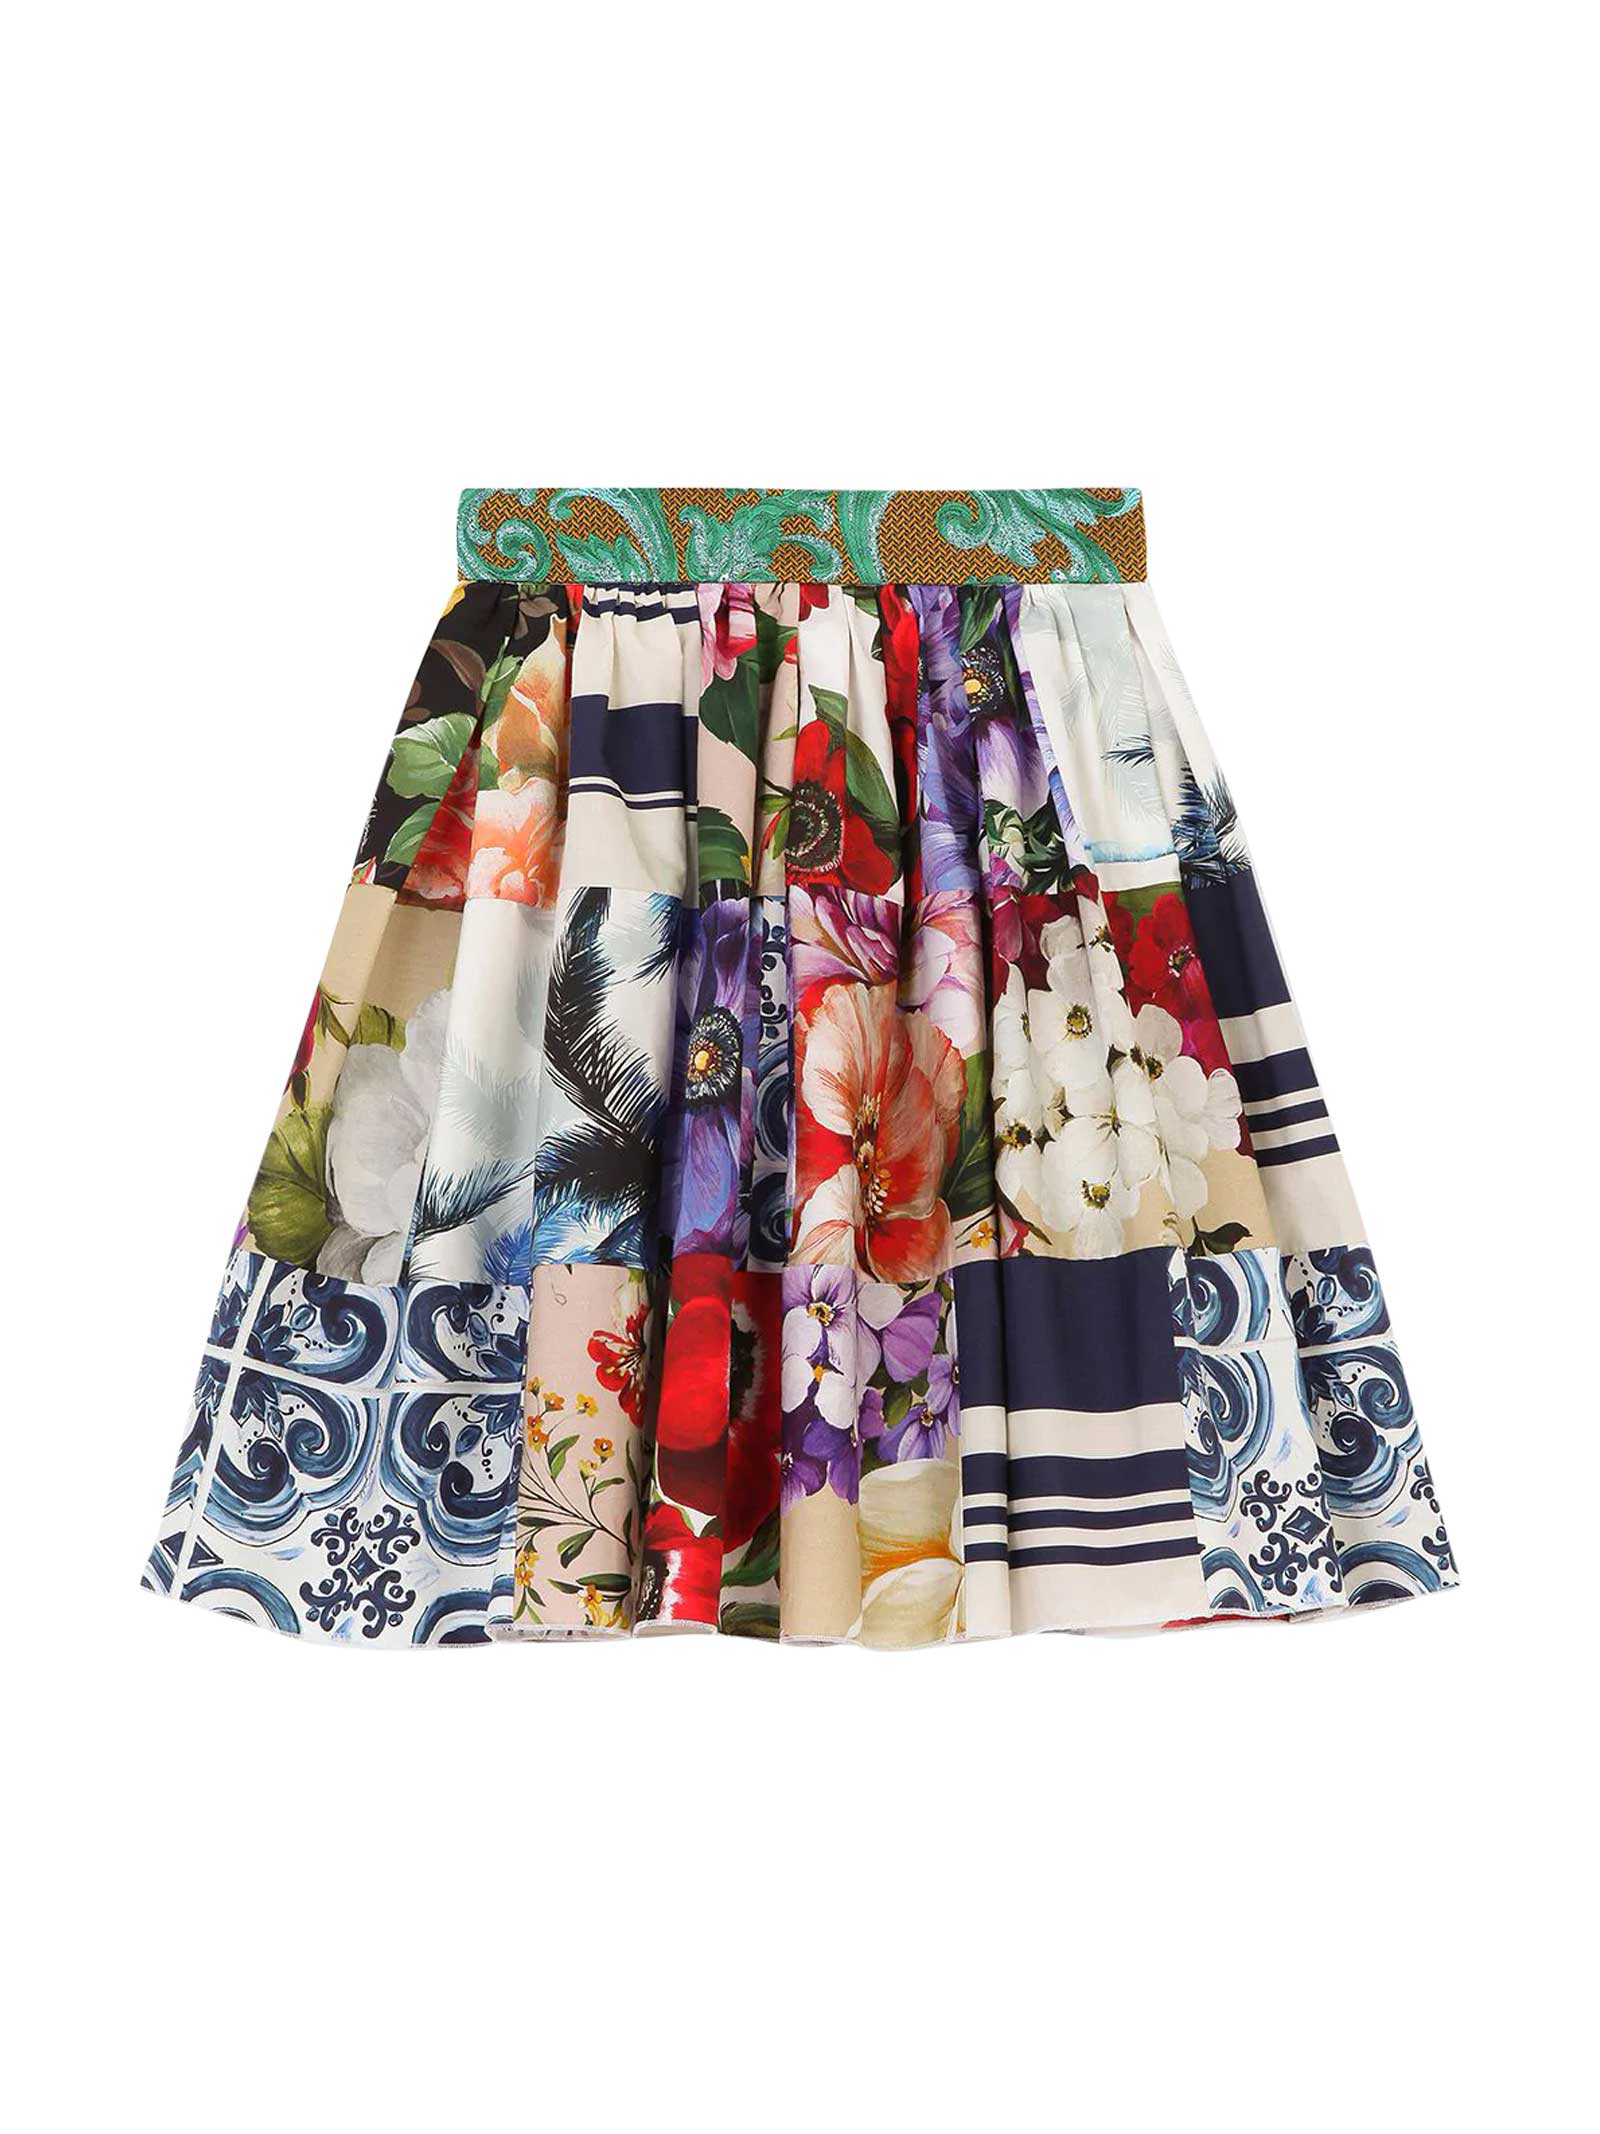 Dolce & Gabbana Patterned Skirt